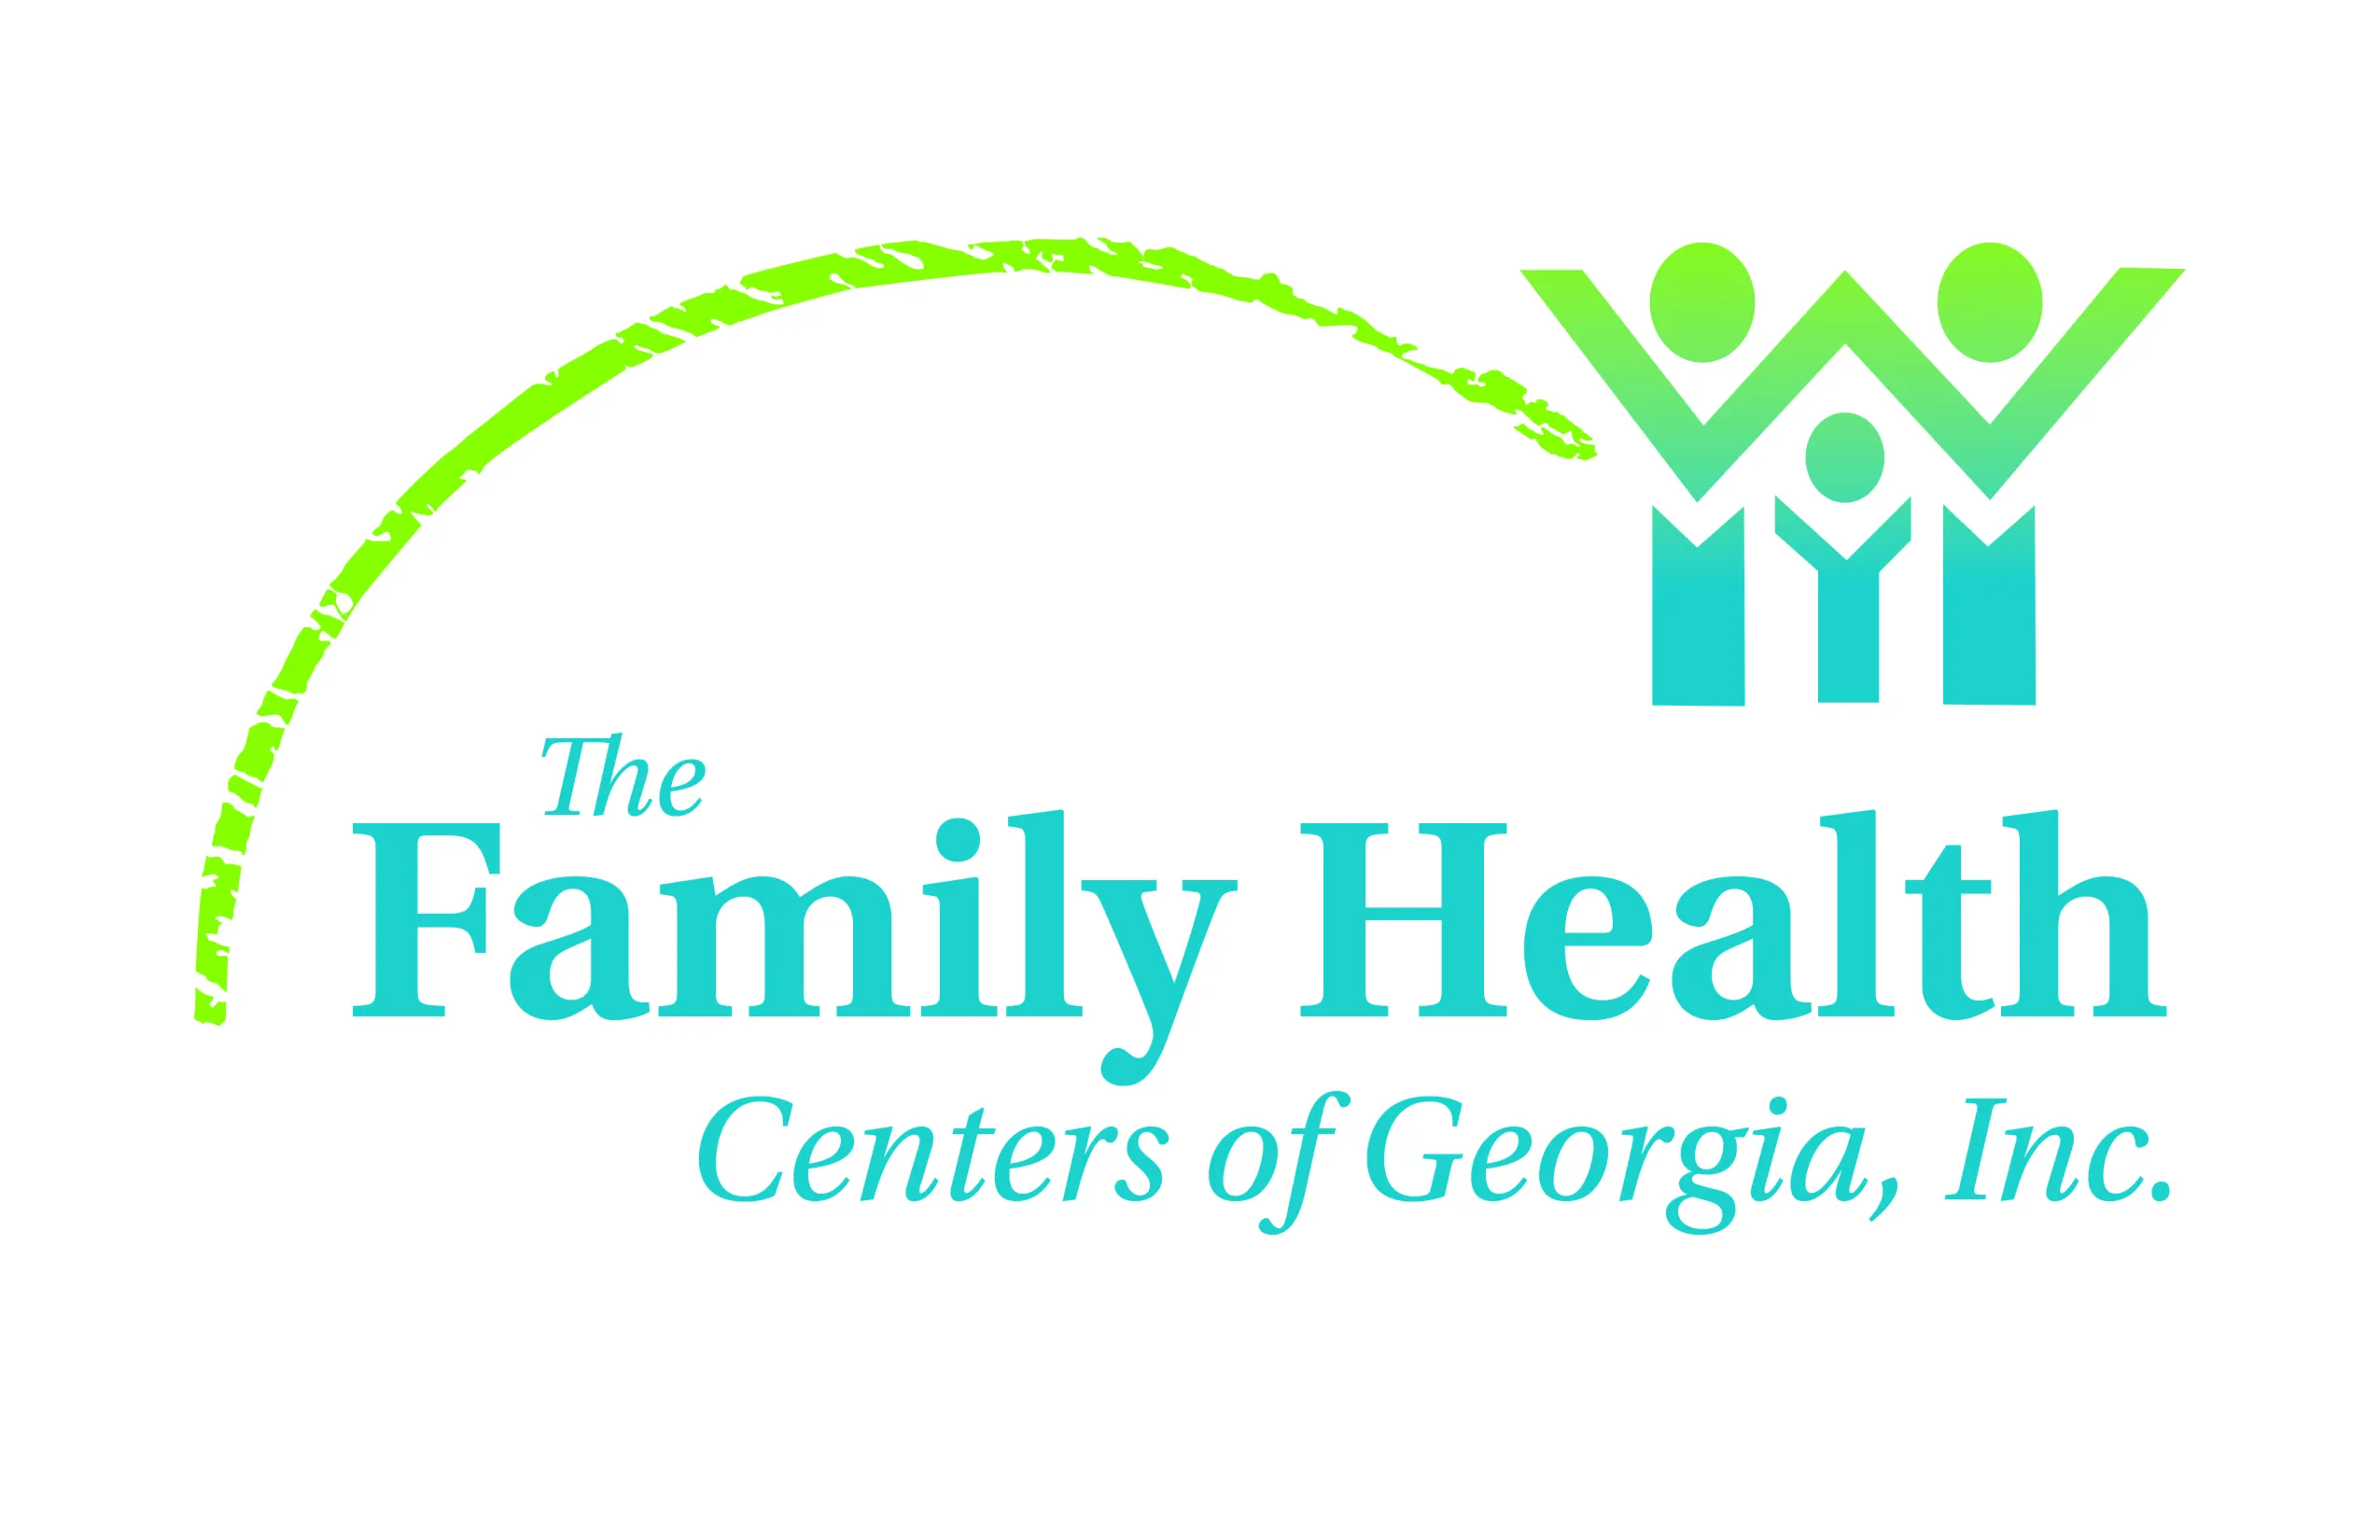 The Family Health Centers of Georgia, Inc.